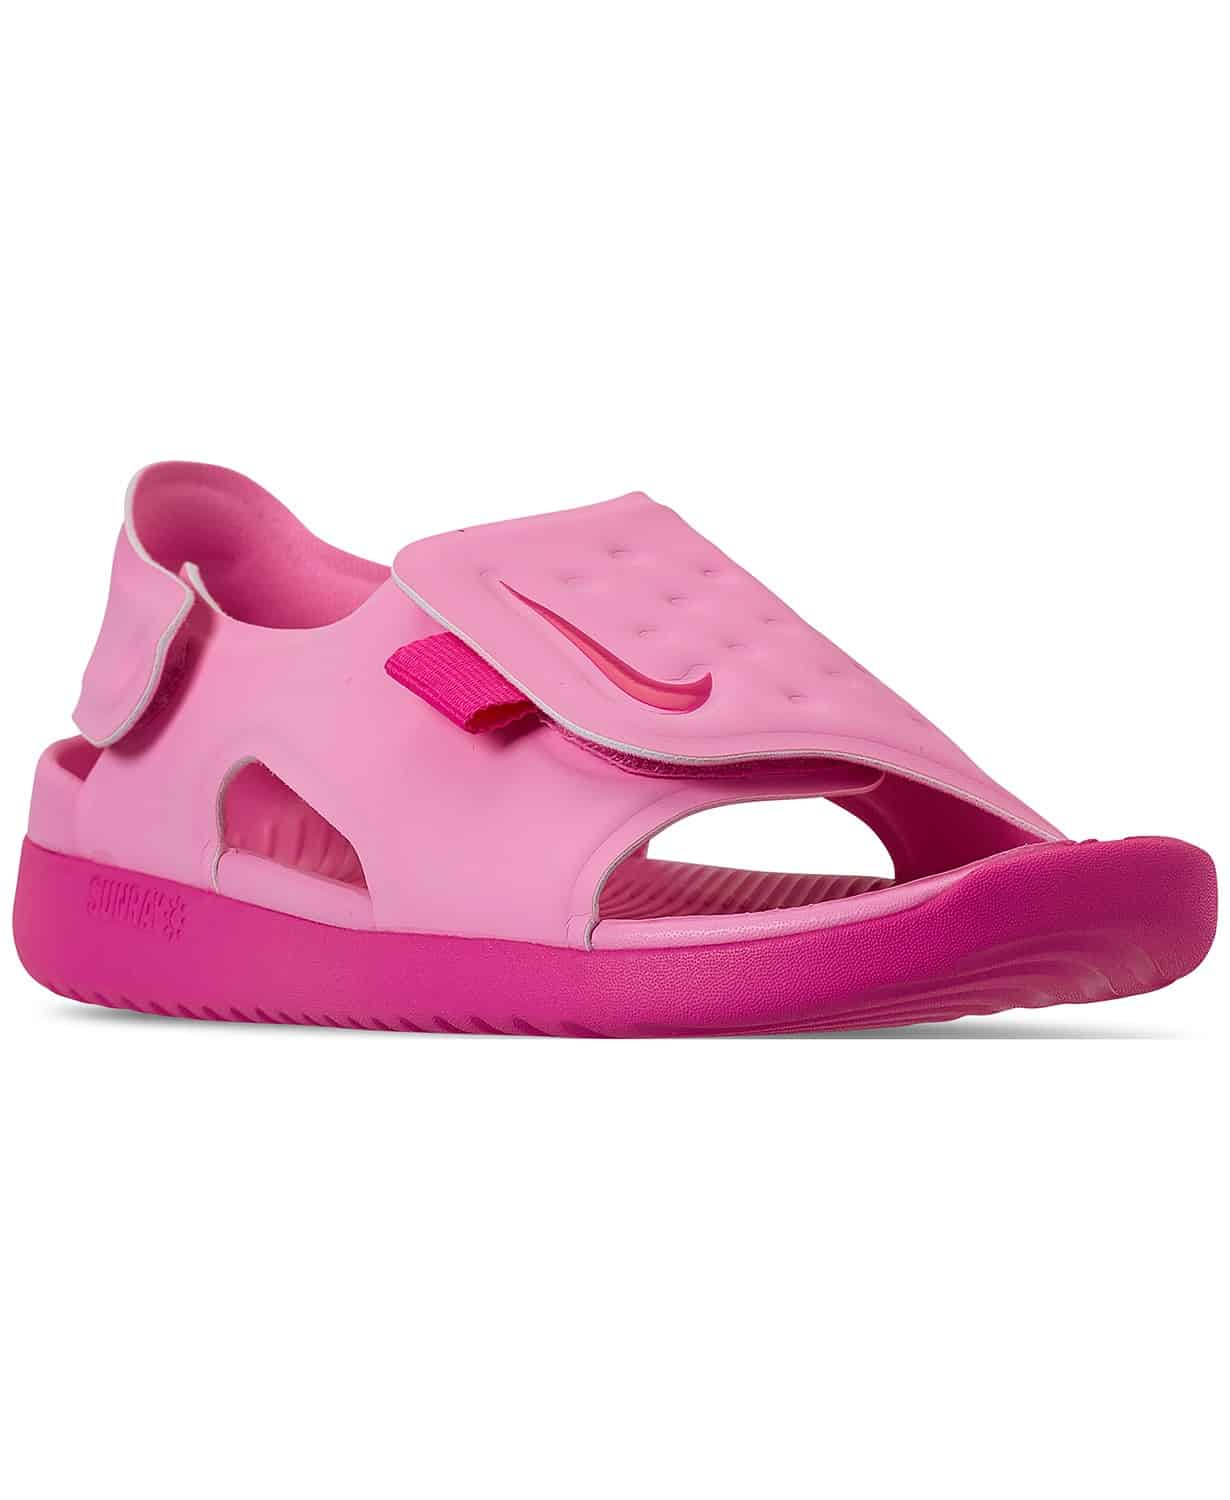 Nike Little Girls' Sunray Adjust 5 Sandals from Finish Line for $15 (reg: $34.99)